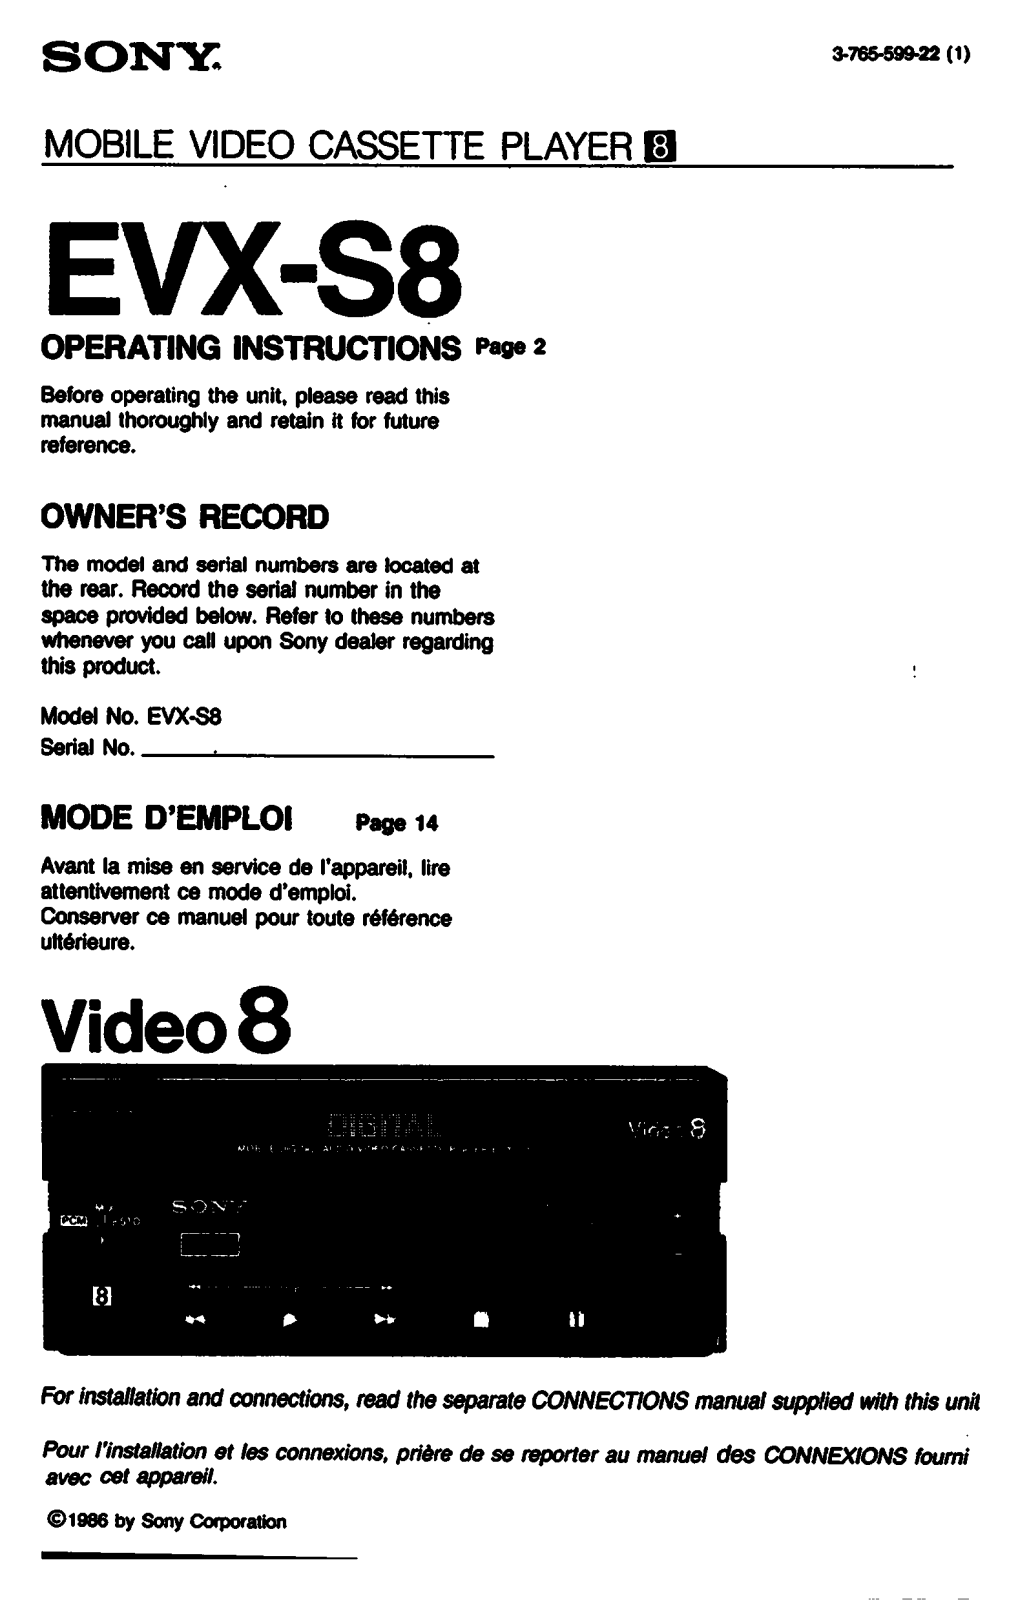 Sony EVXS8 Operating Manual